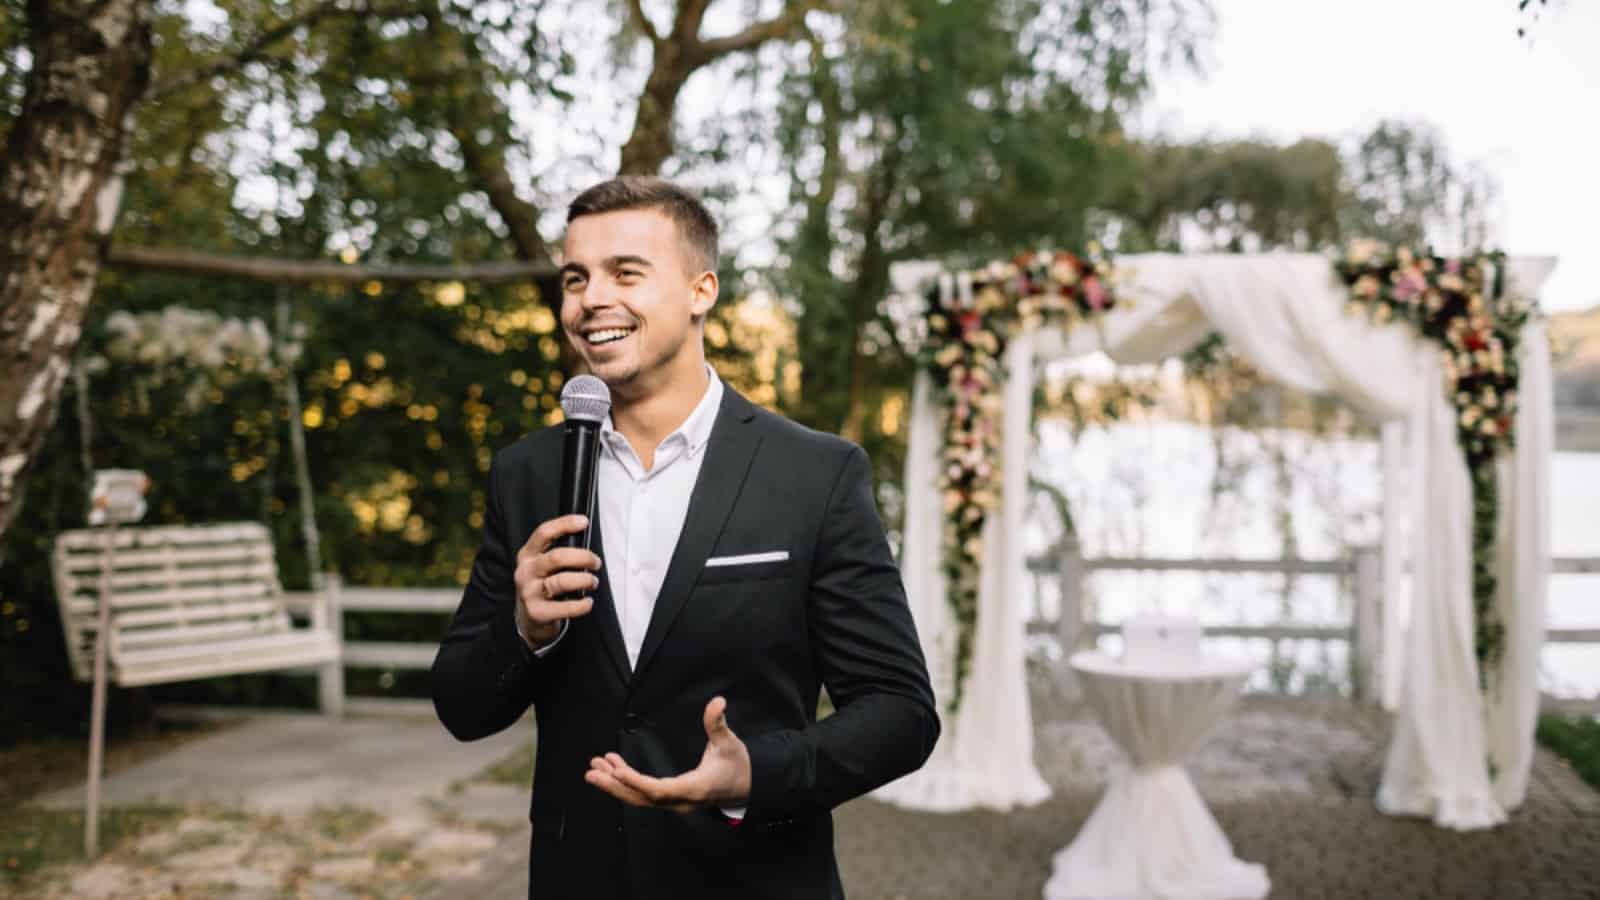 Man speech at wedding